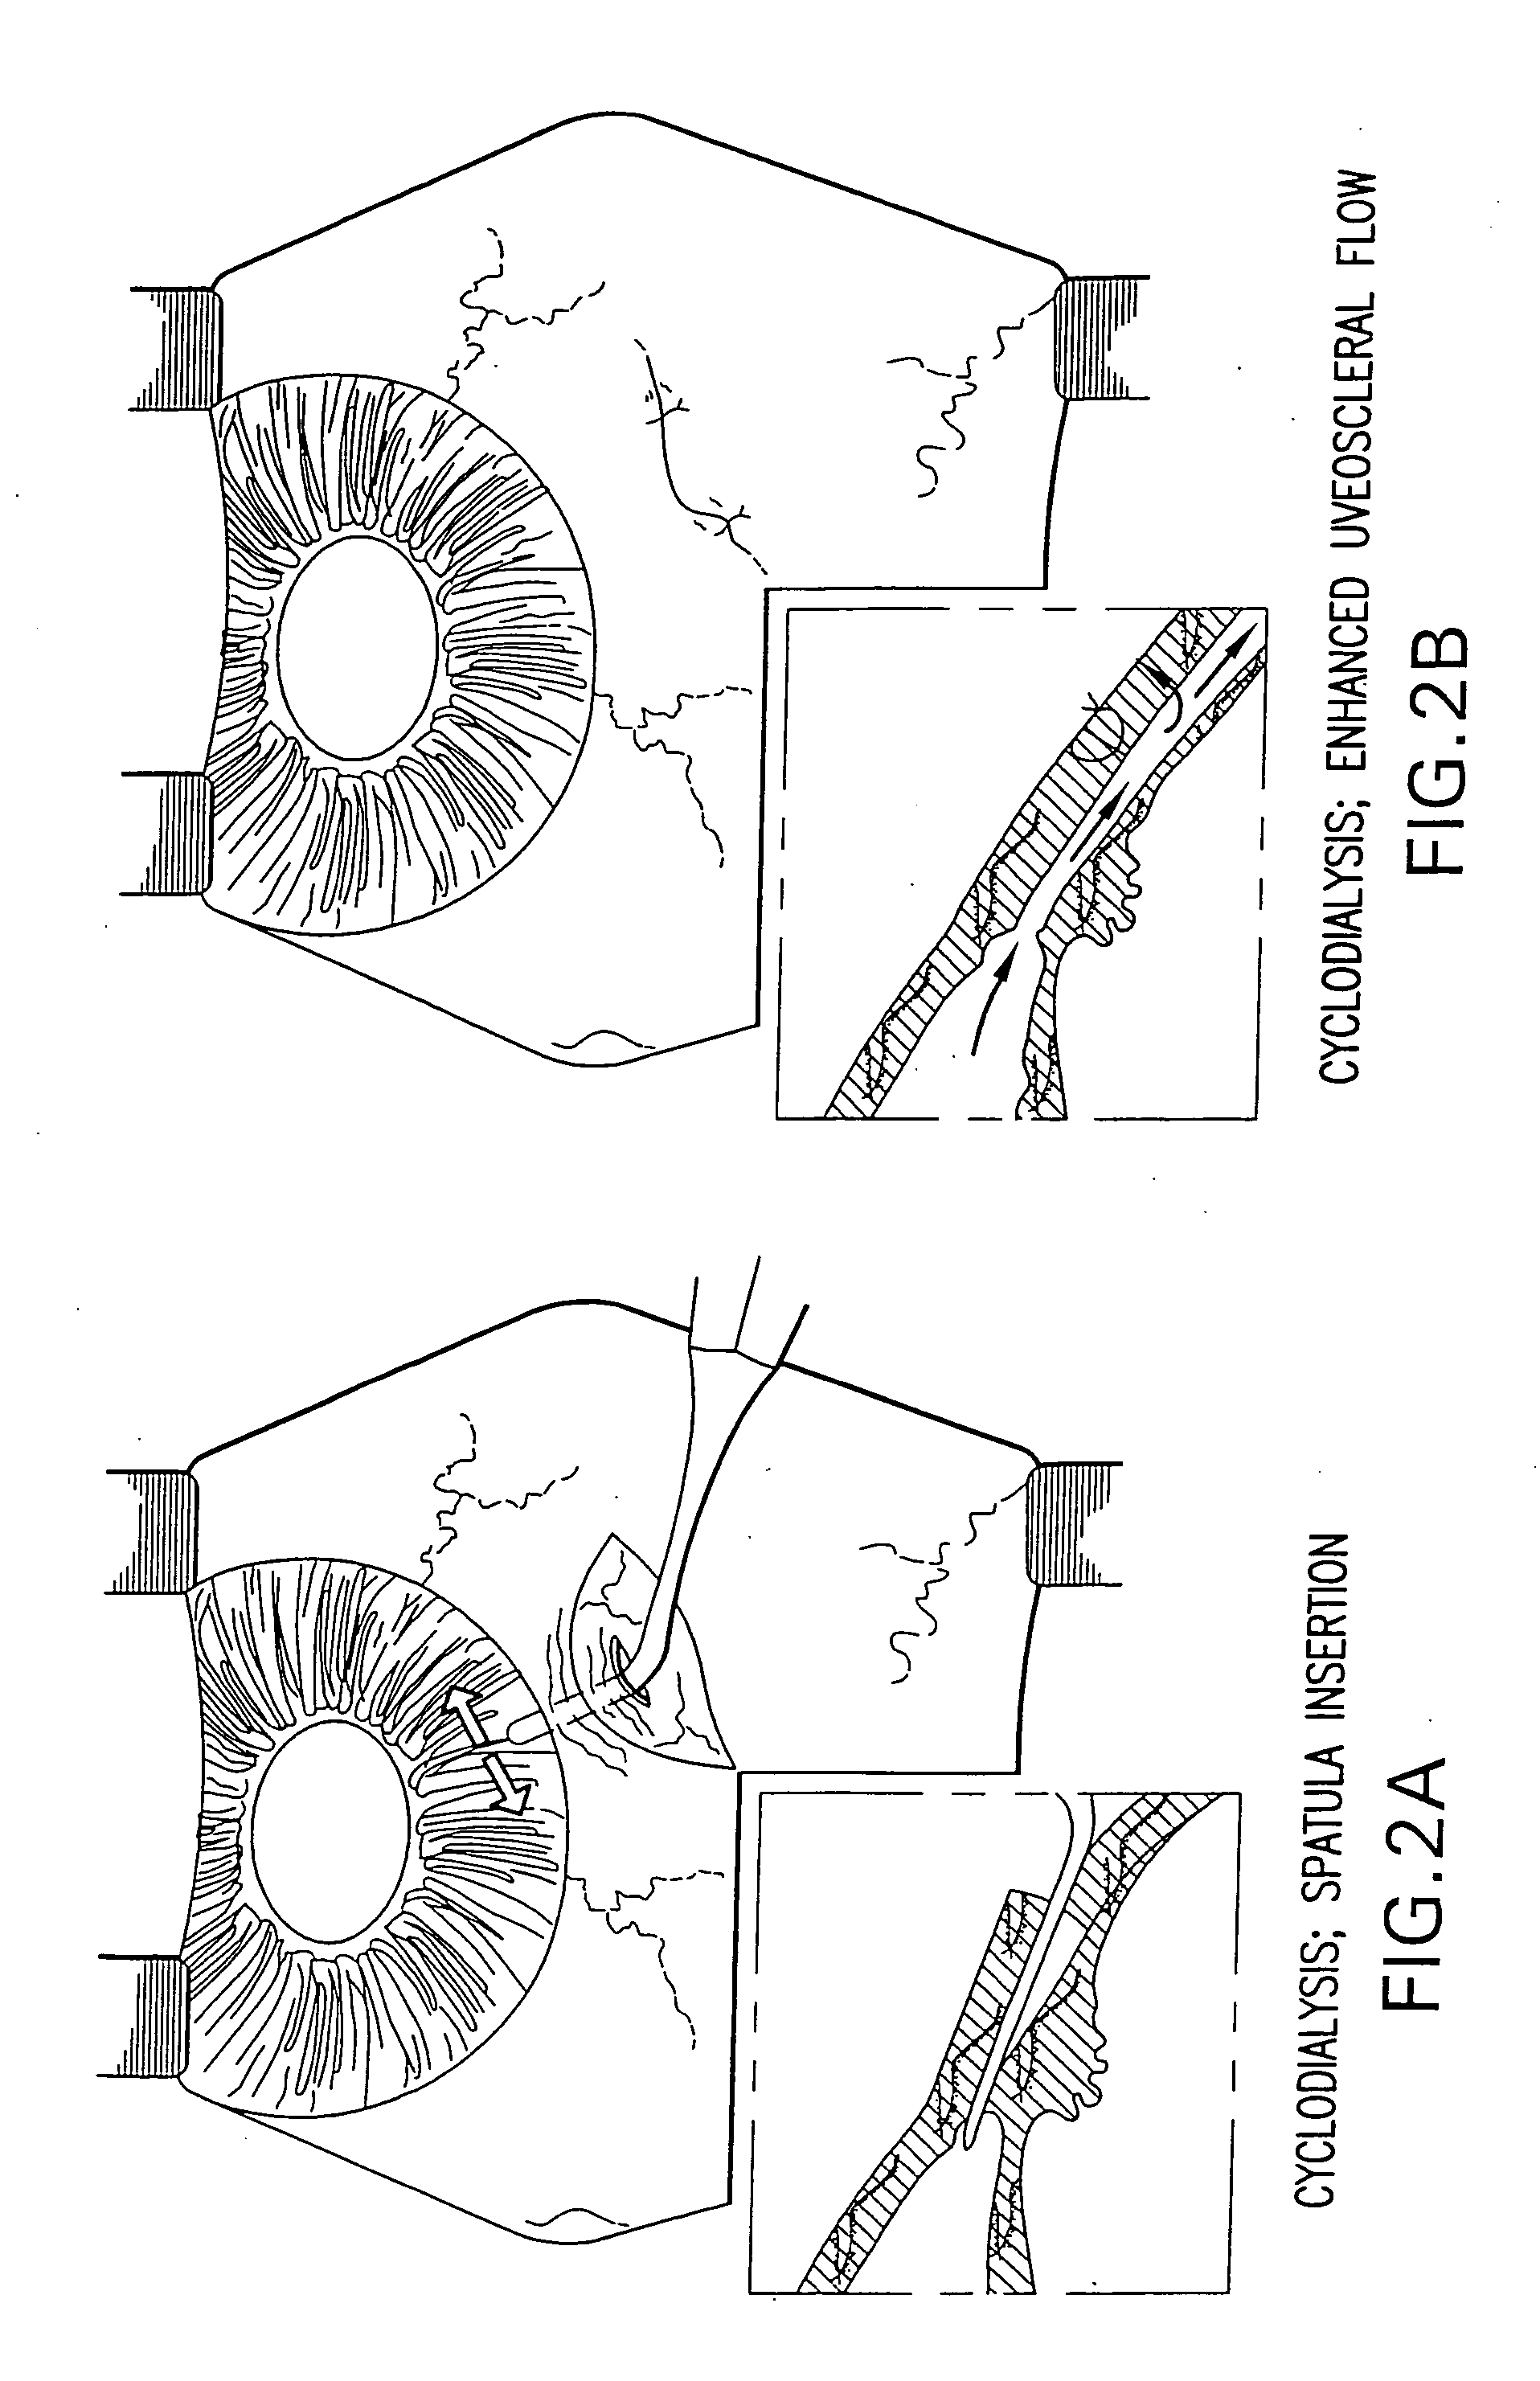 Uveoscleral drainage device